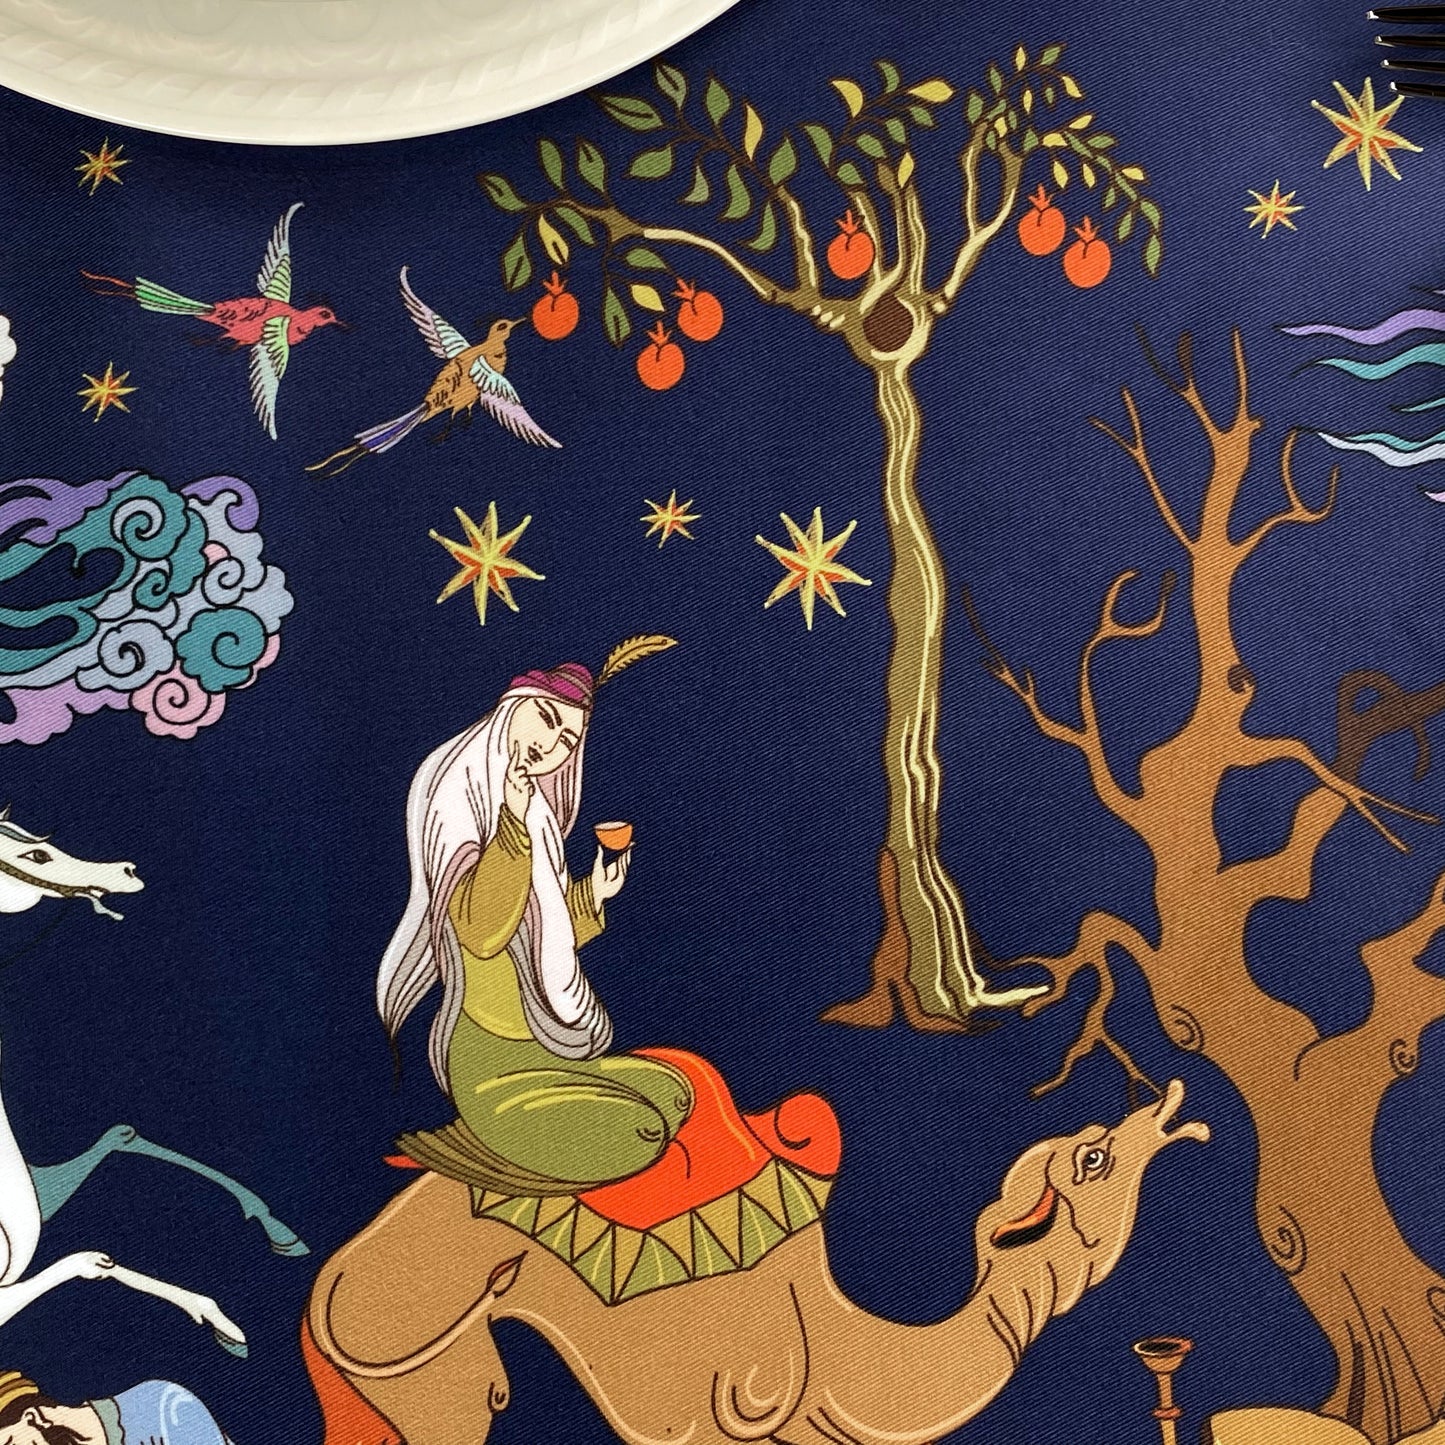 Double Sided Fairy-tale Art Print Table Runner 16" X 54", Medieval Persian Frescoes Art Design, Horse and Bird Centerpiece Runner